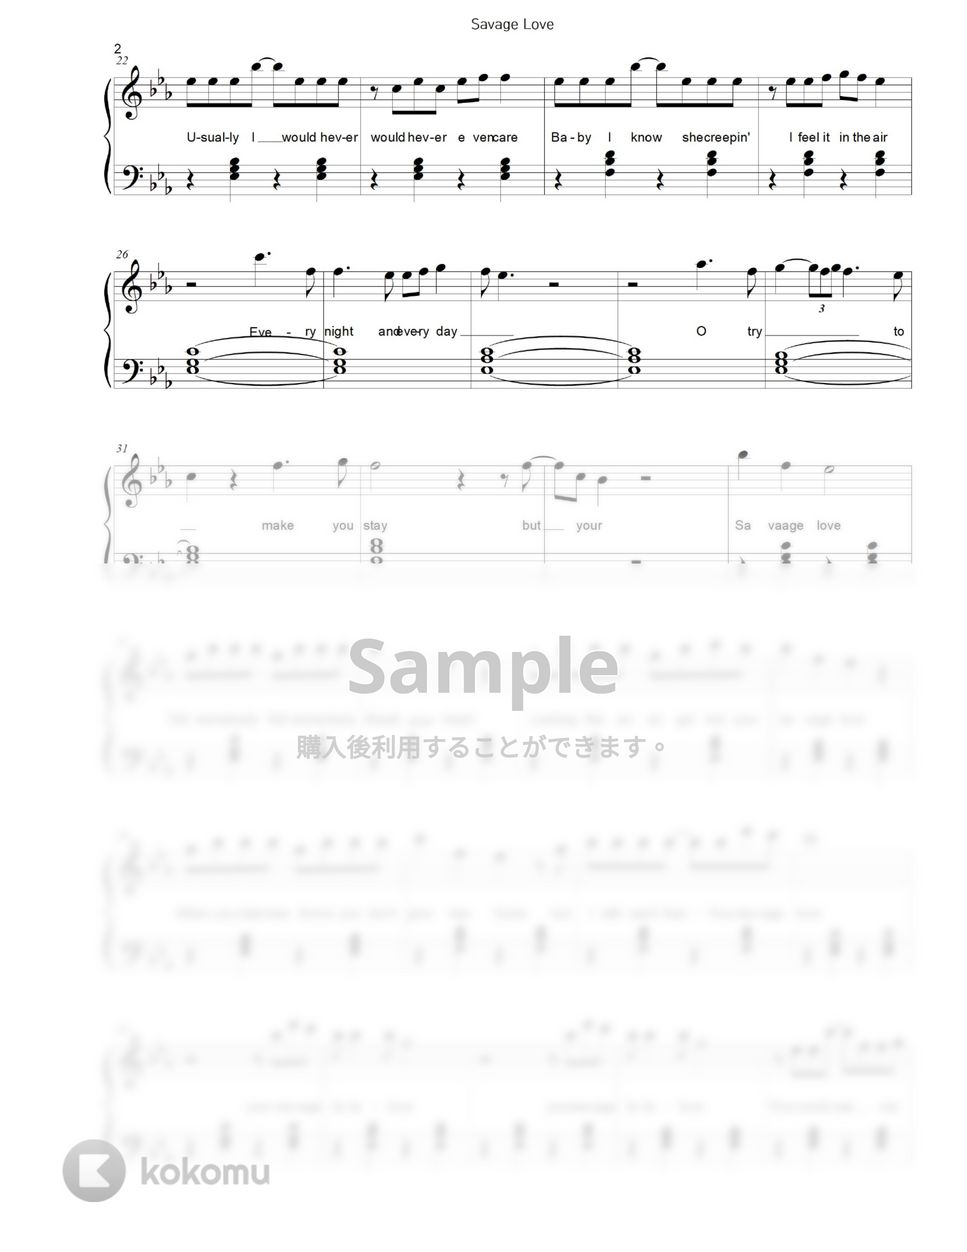 防弾少年団(BTS), Jason Derulo, Jawsh 685 - Savage Love (Original Key / 伴奏音源付き) by A-sam